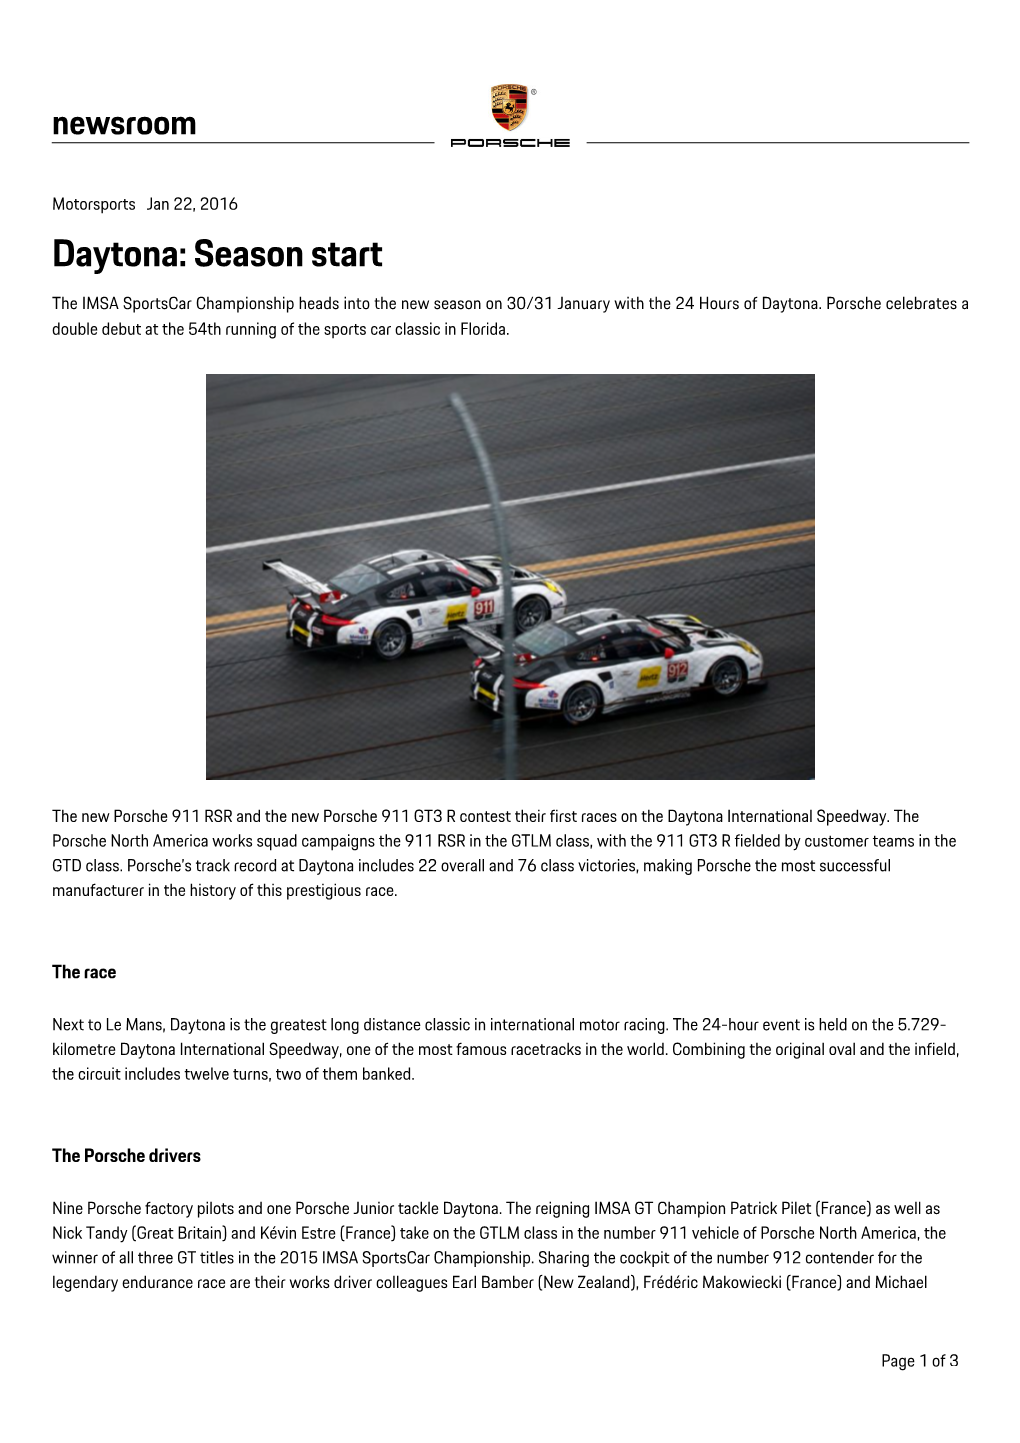 Daytona: Season Start the IMSA Sportscar Championship Heads Into the New Season on 30/31 January with the 24 Hours of Daytona